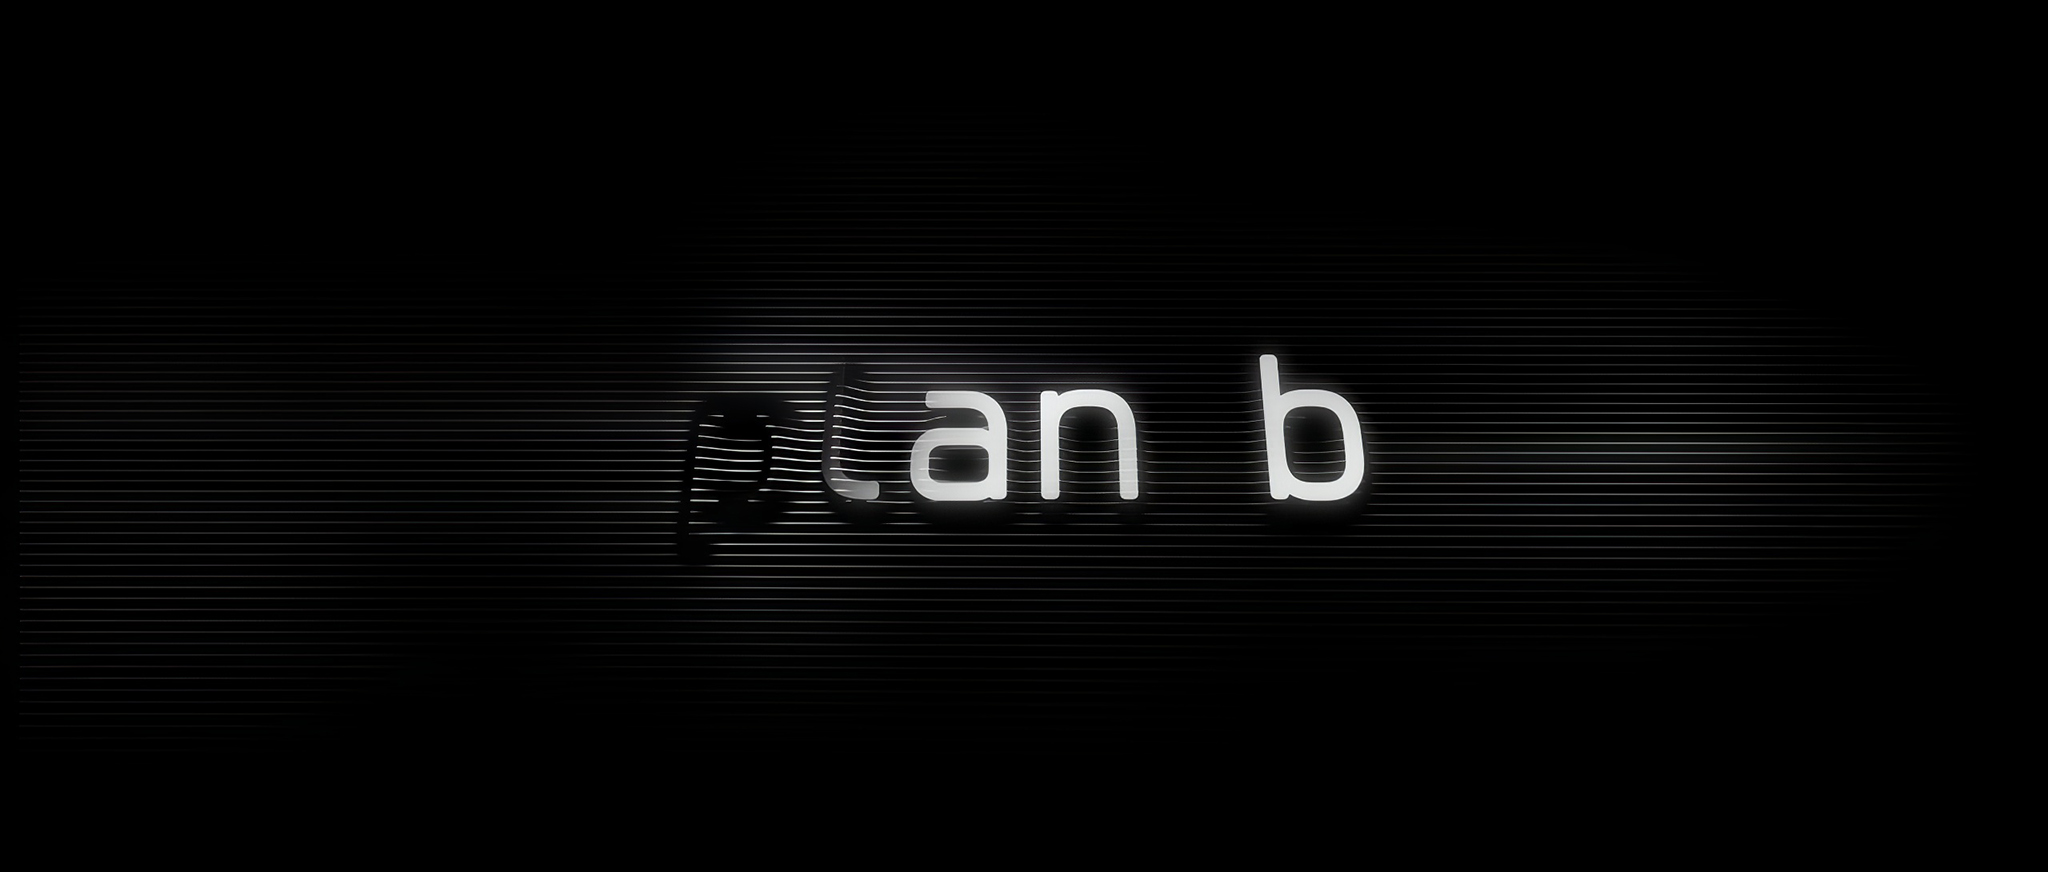 planb_B_frame_06.pg